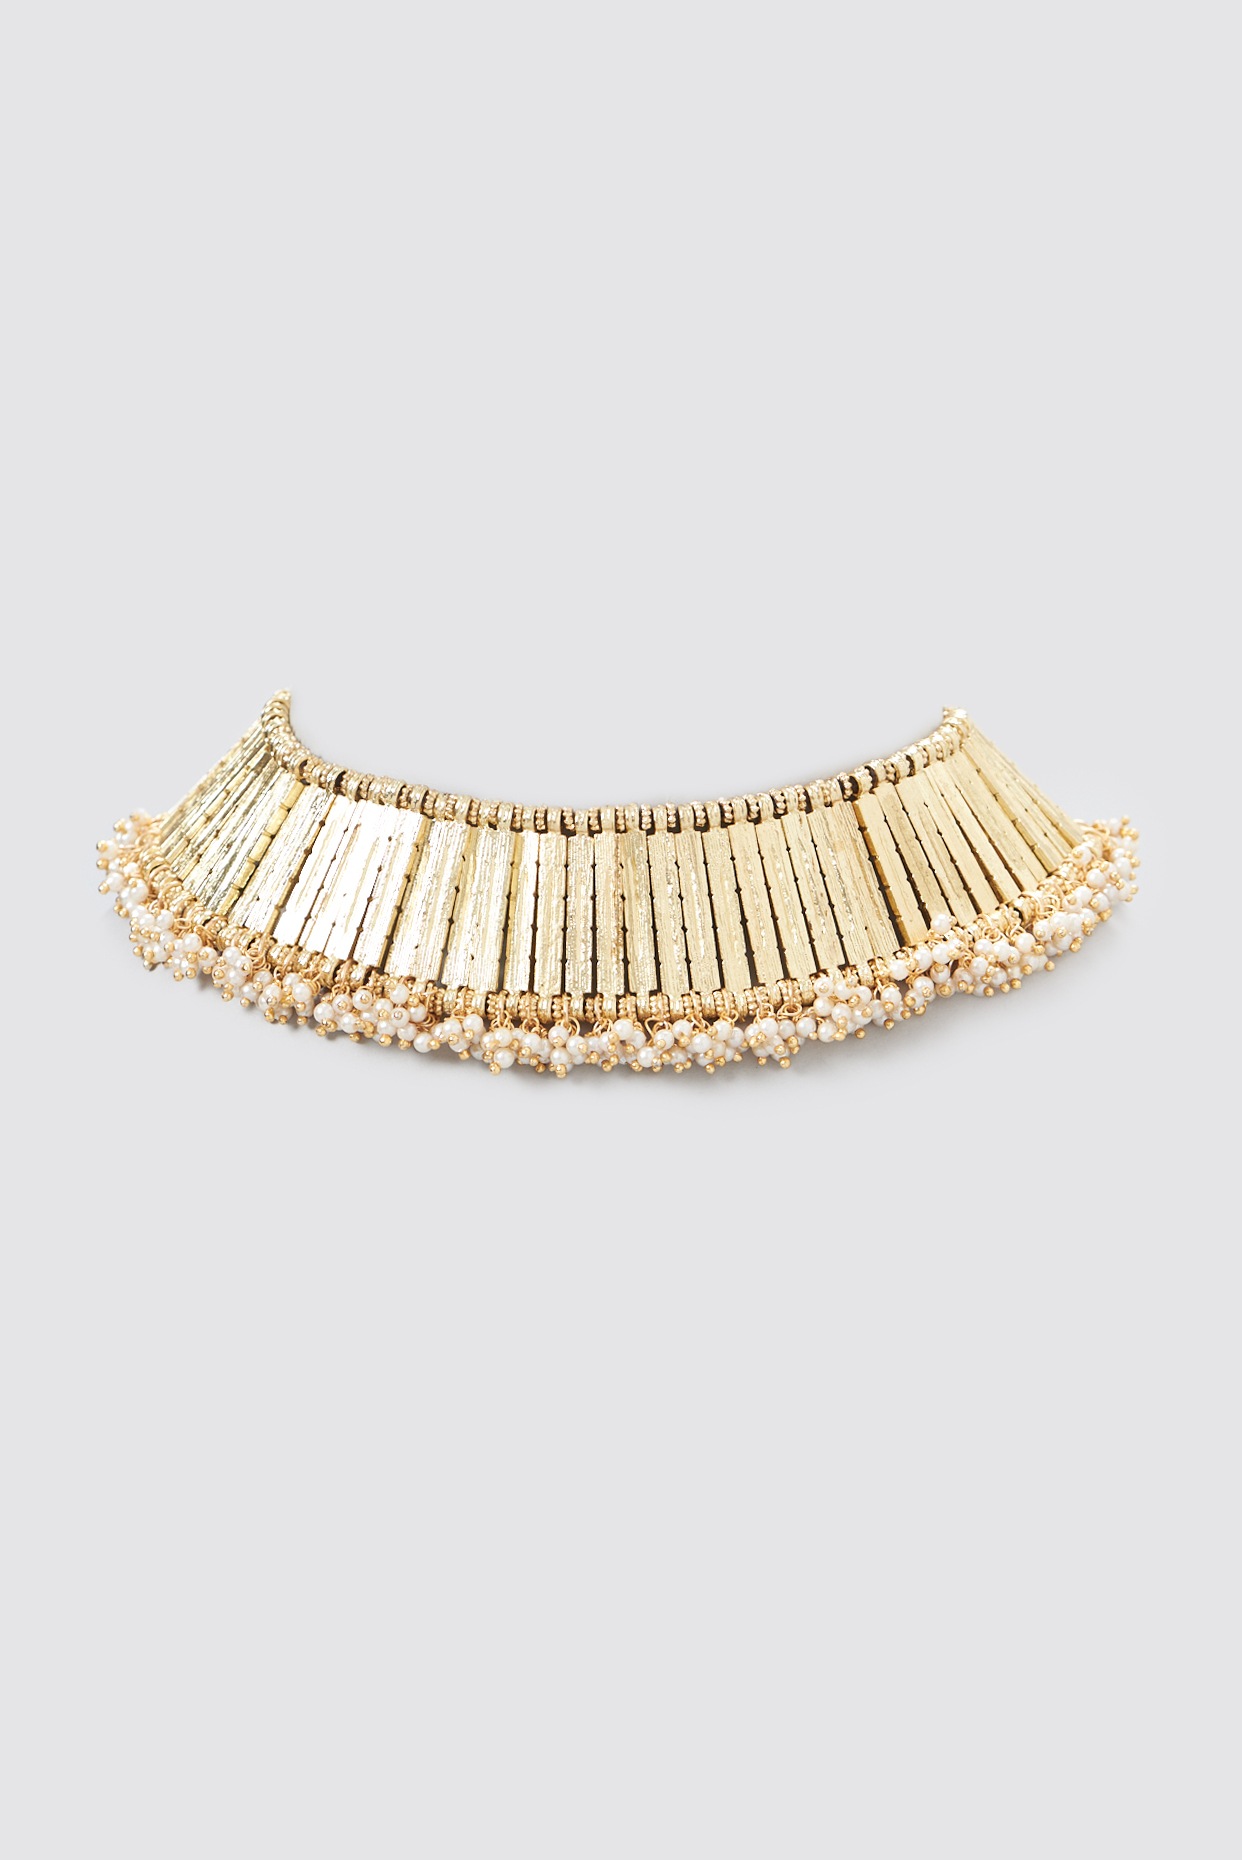 Cleopatra Necklace Gold Choker – CARBICKOVA CROWNS